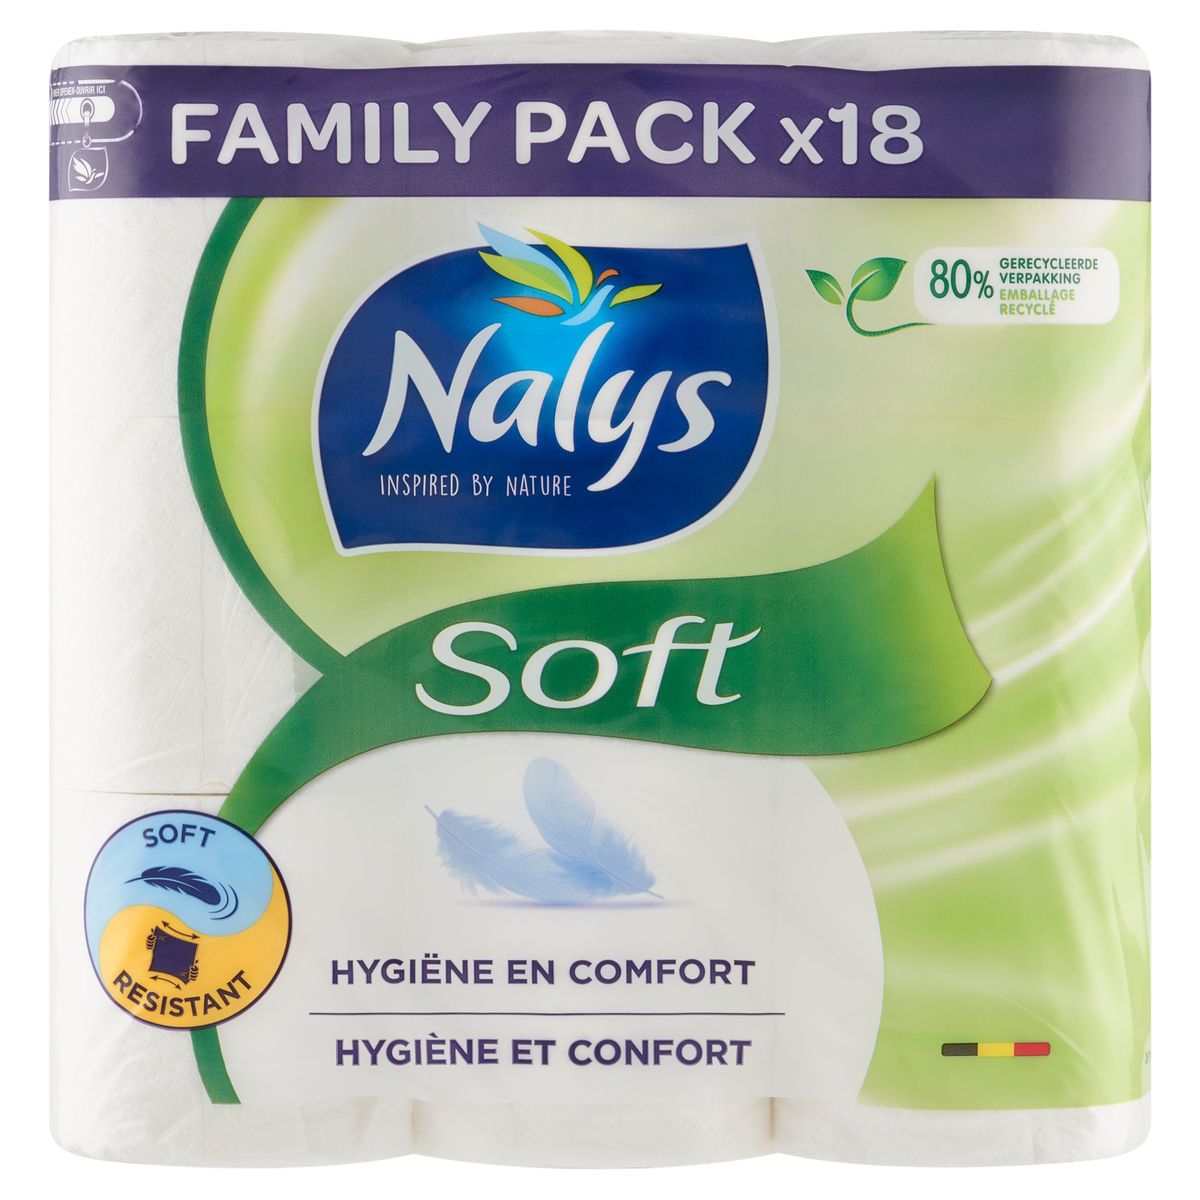 Nalys Soft Toiletpapier Family Pack 18 Rollen